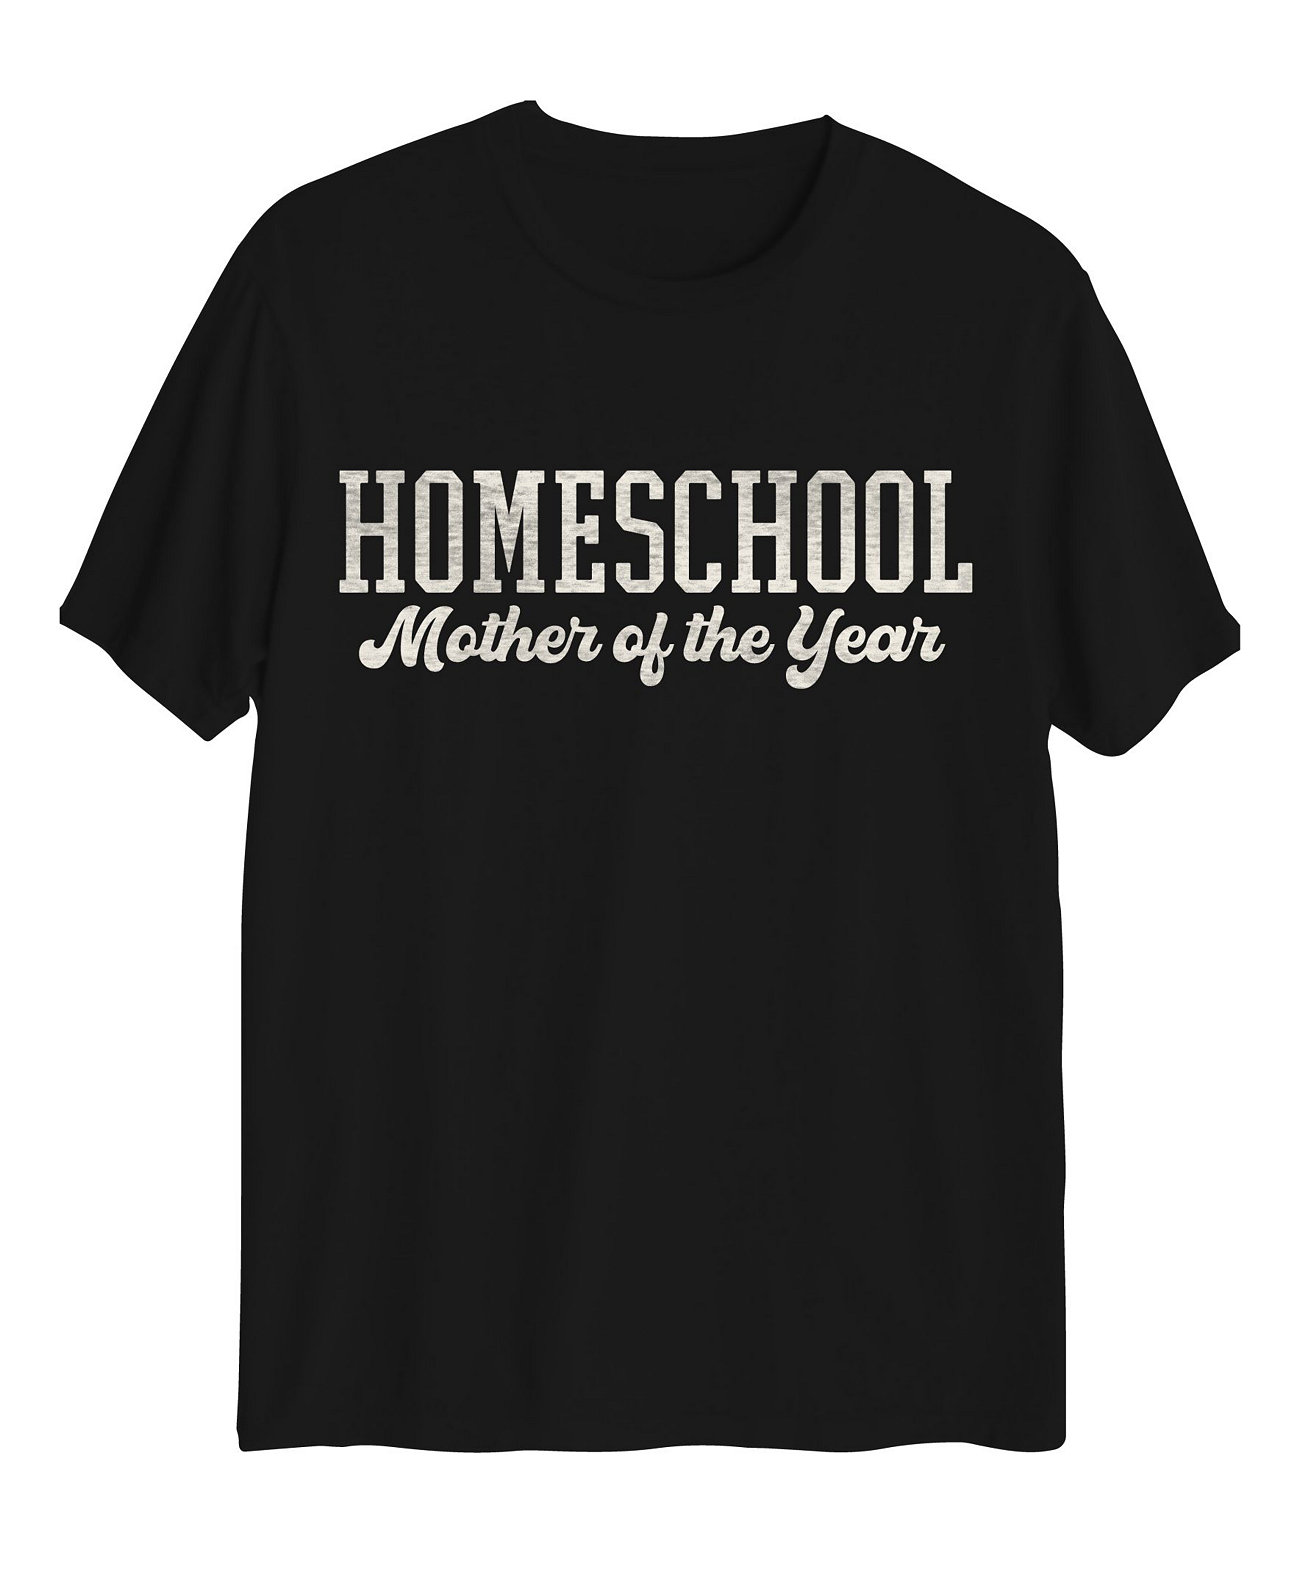 Женская футболка Homeschool "Мать года" Love Tribe